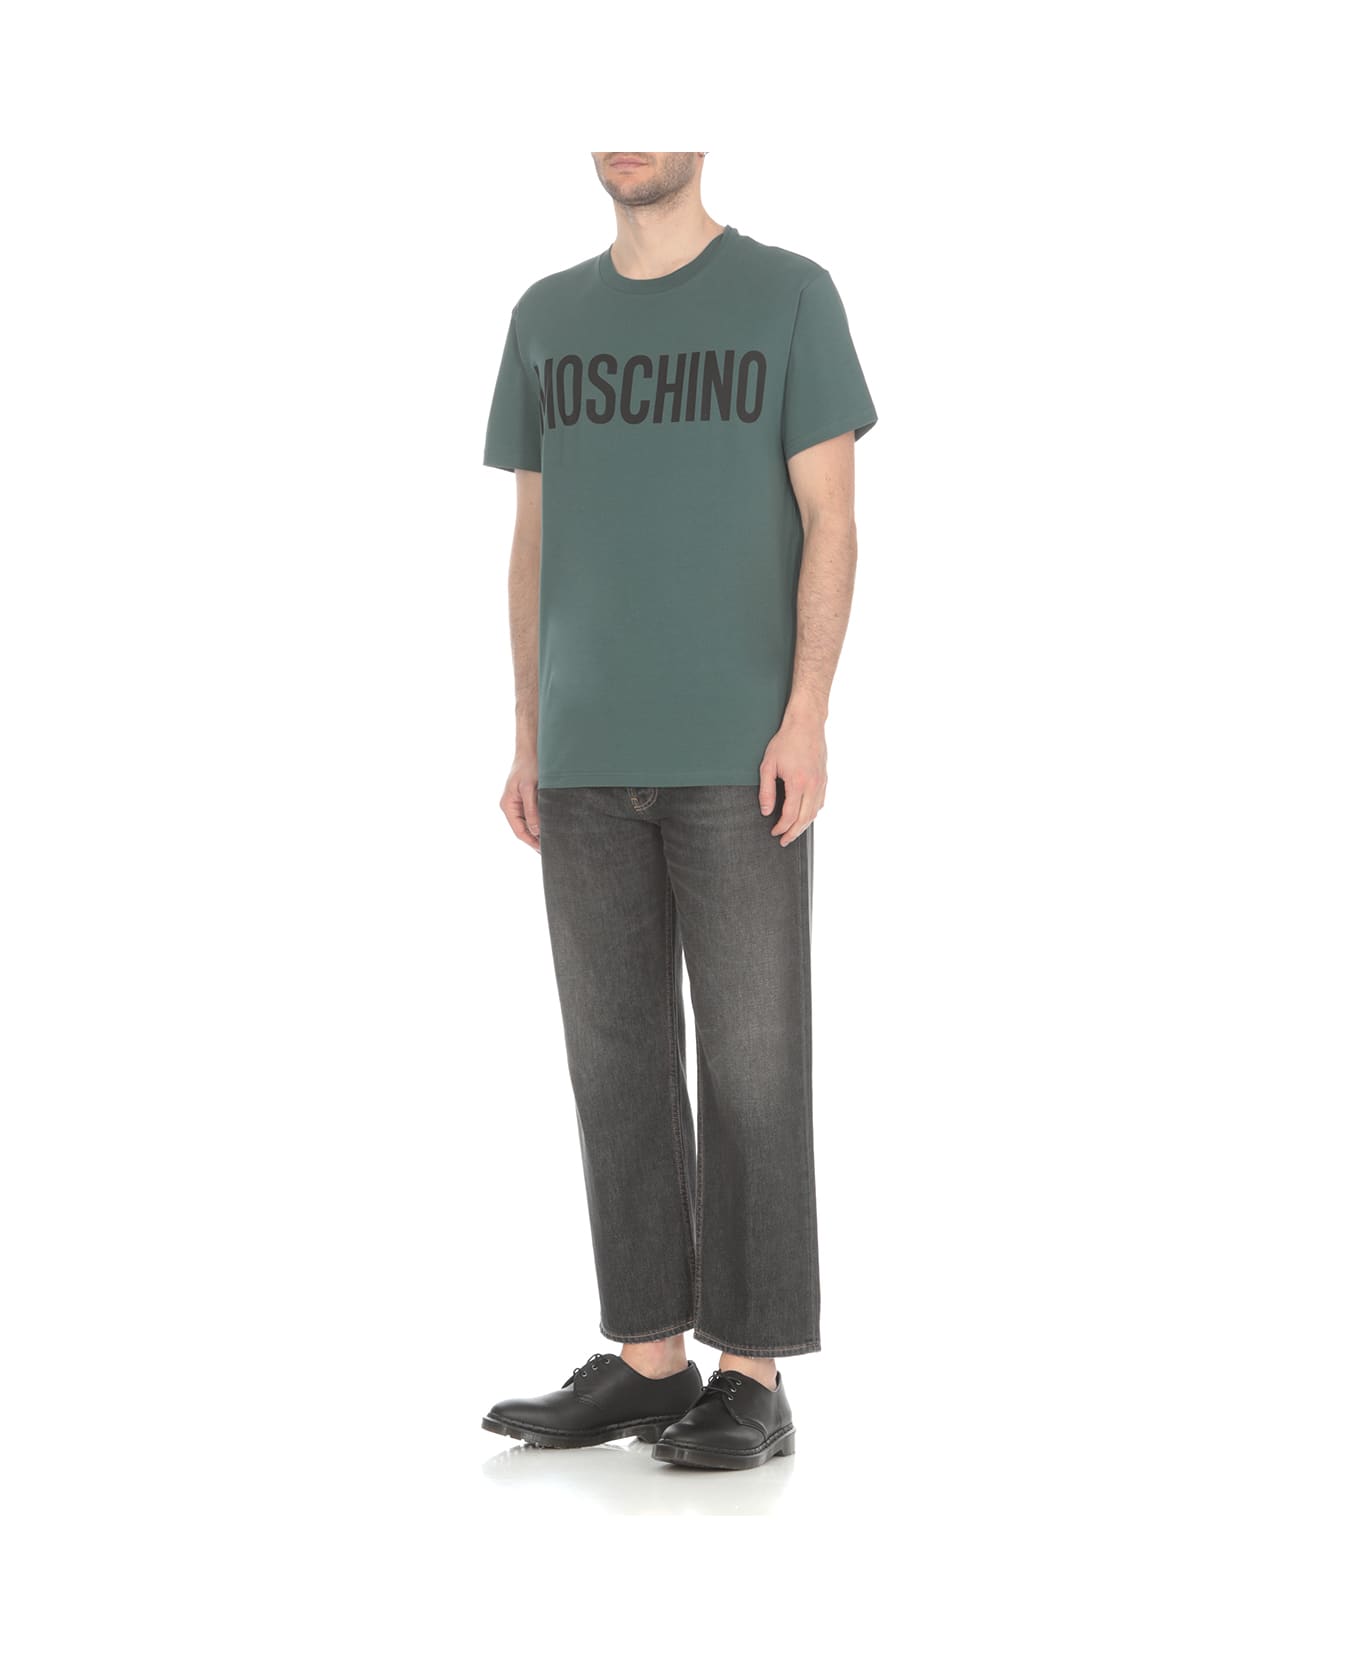 Moschino T-shirt With Logo - Green